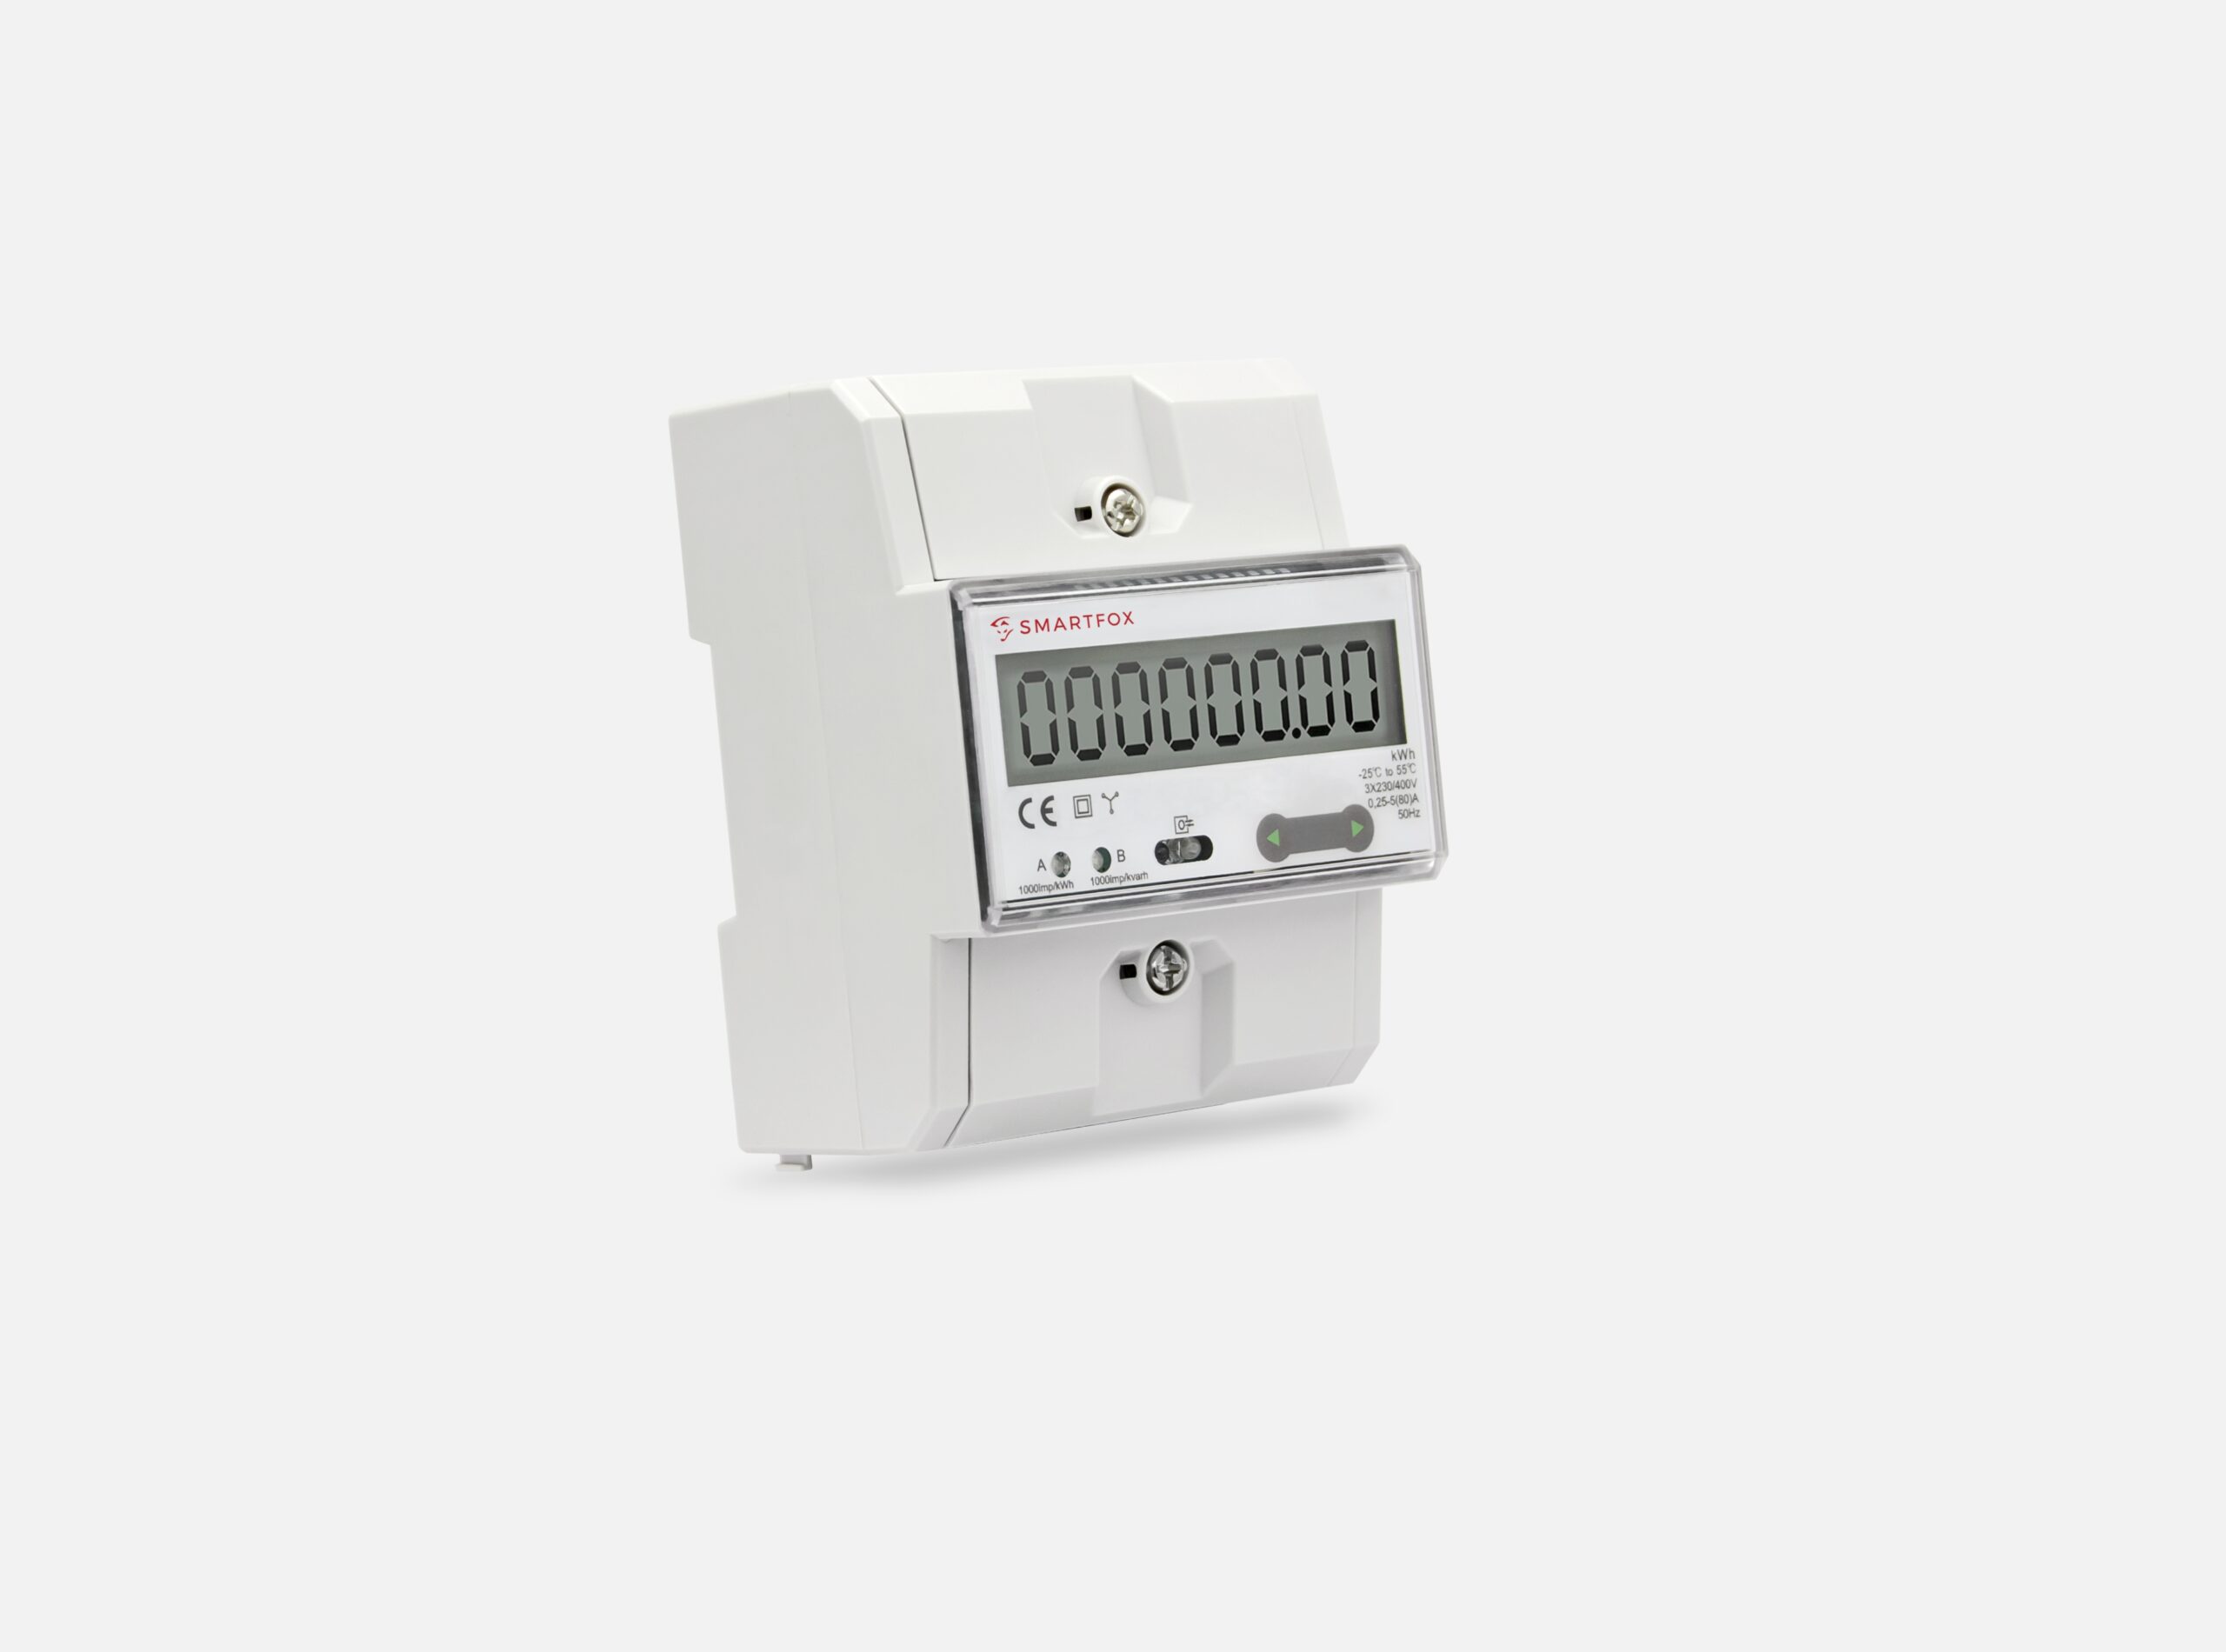 SMARTFOX Energy Meter